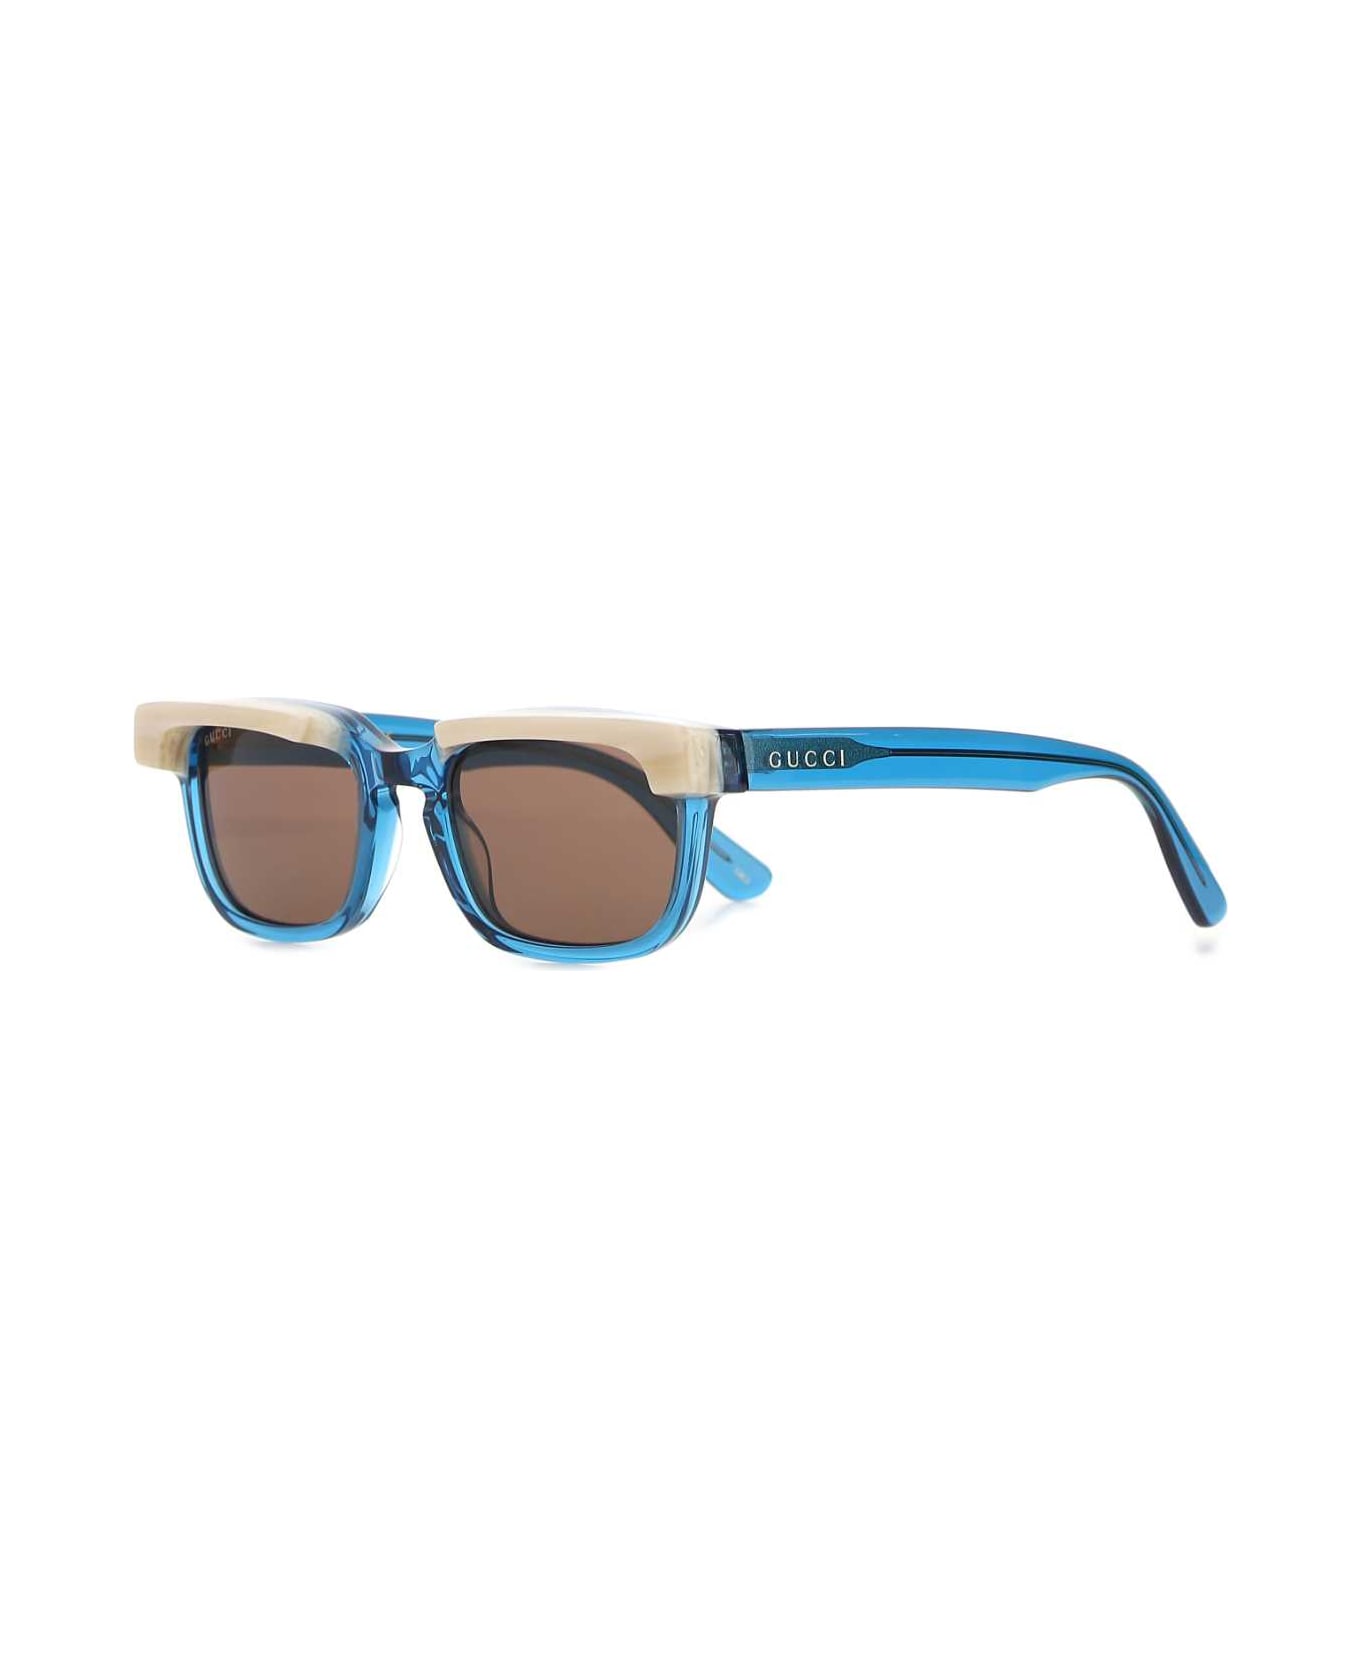 Gucci Light Blue Acetate Sunglasses - 4623 サングラス